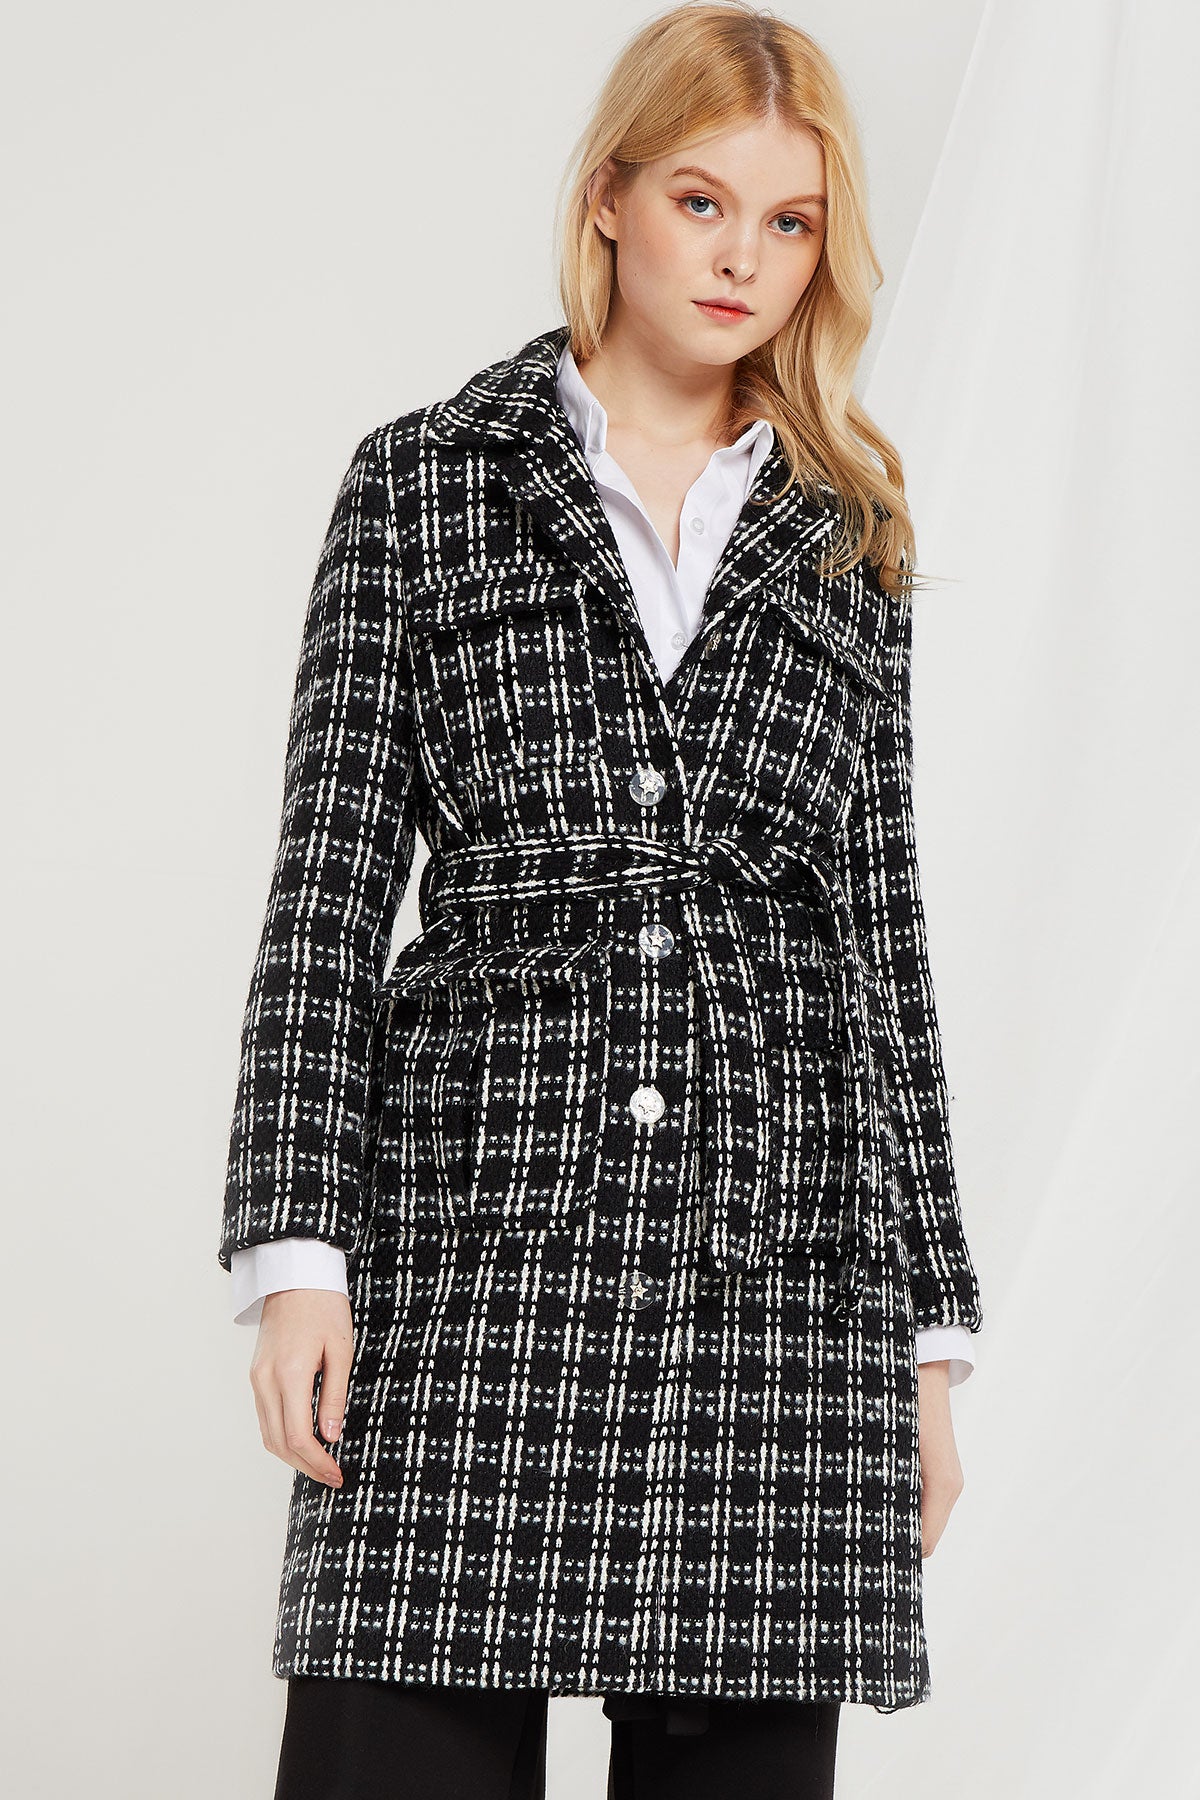 Mabel Criss Cross Coat | Women's Jackets & Coats | storets